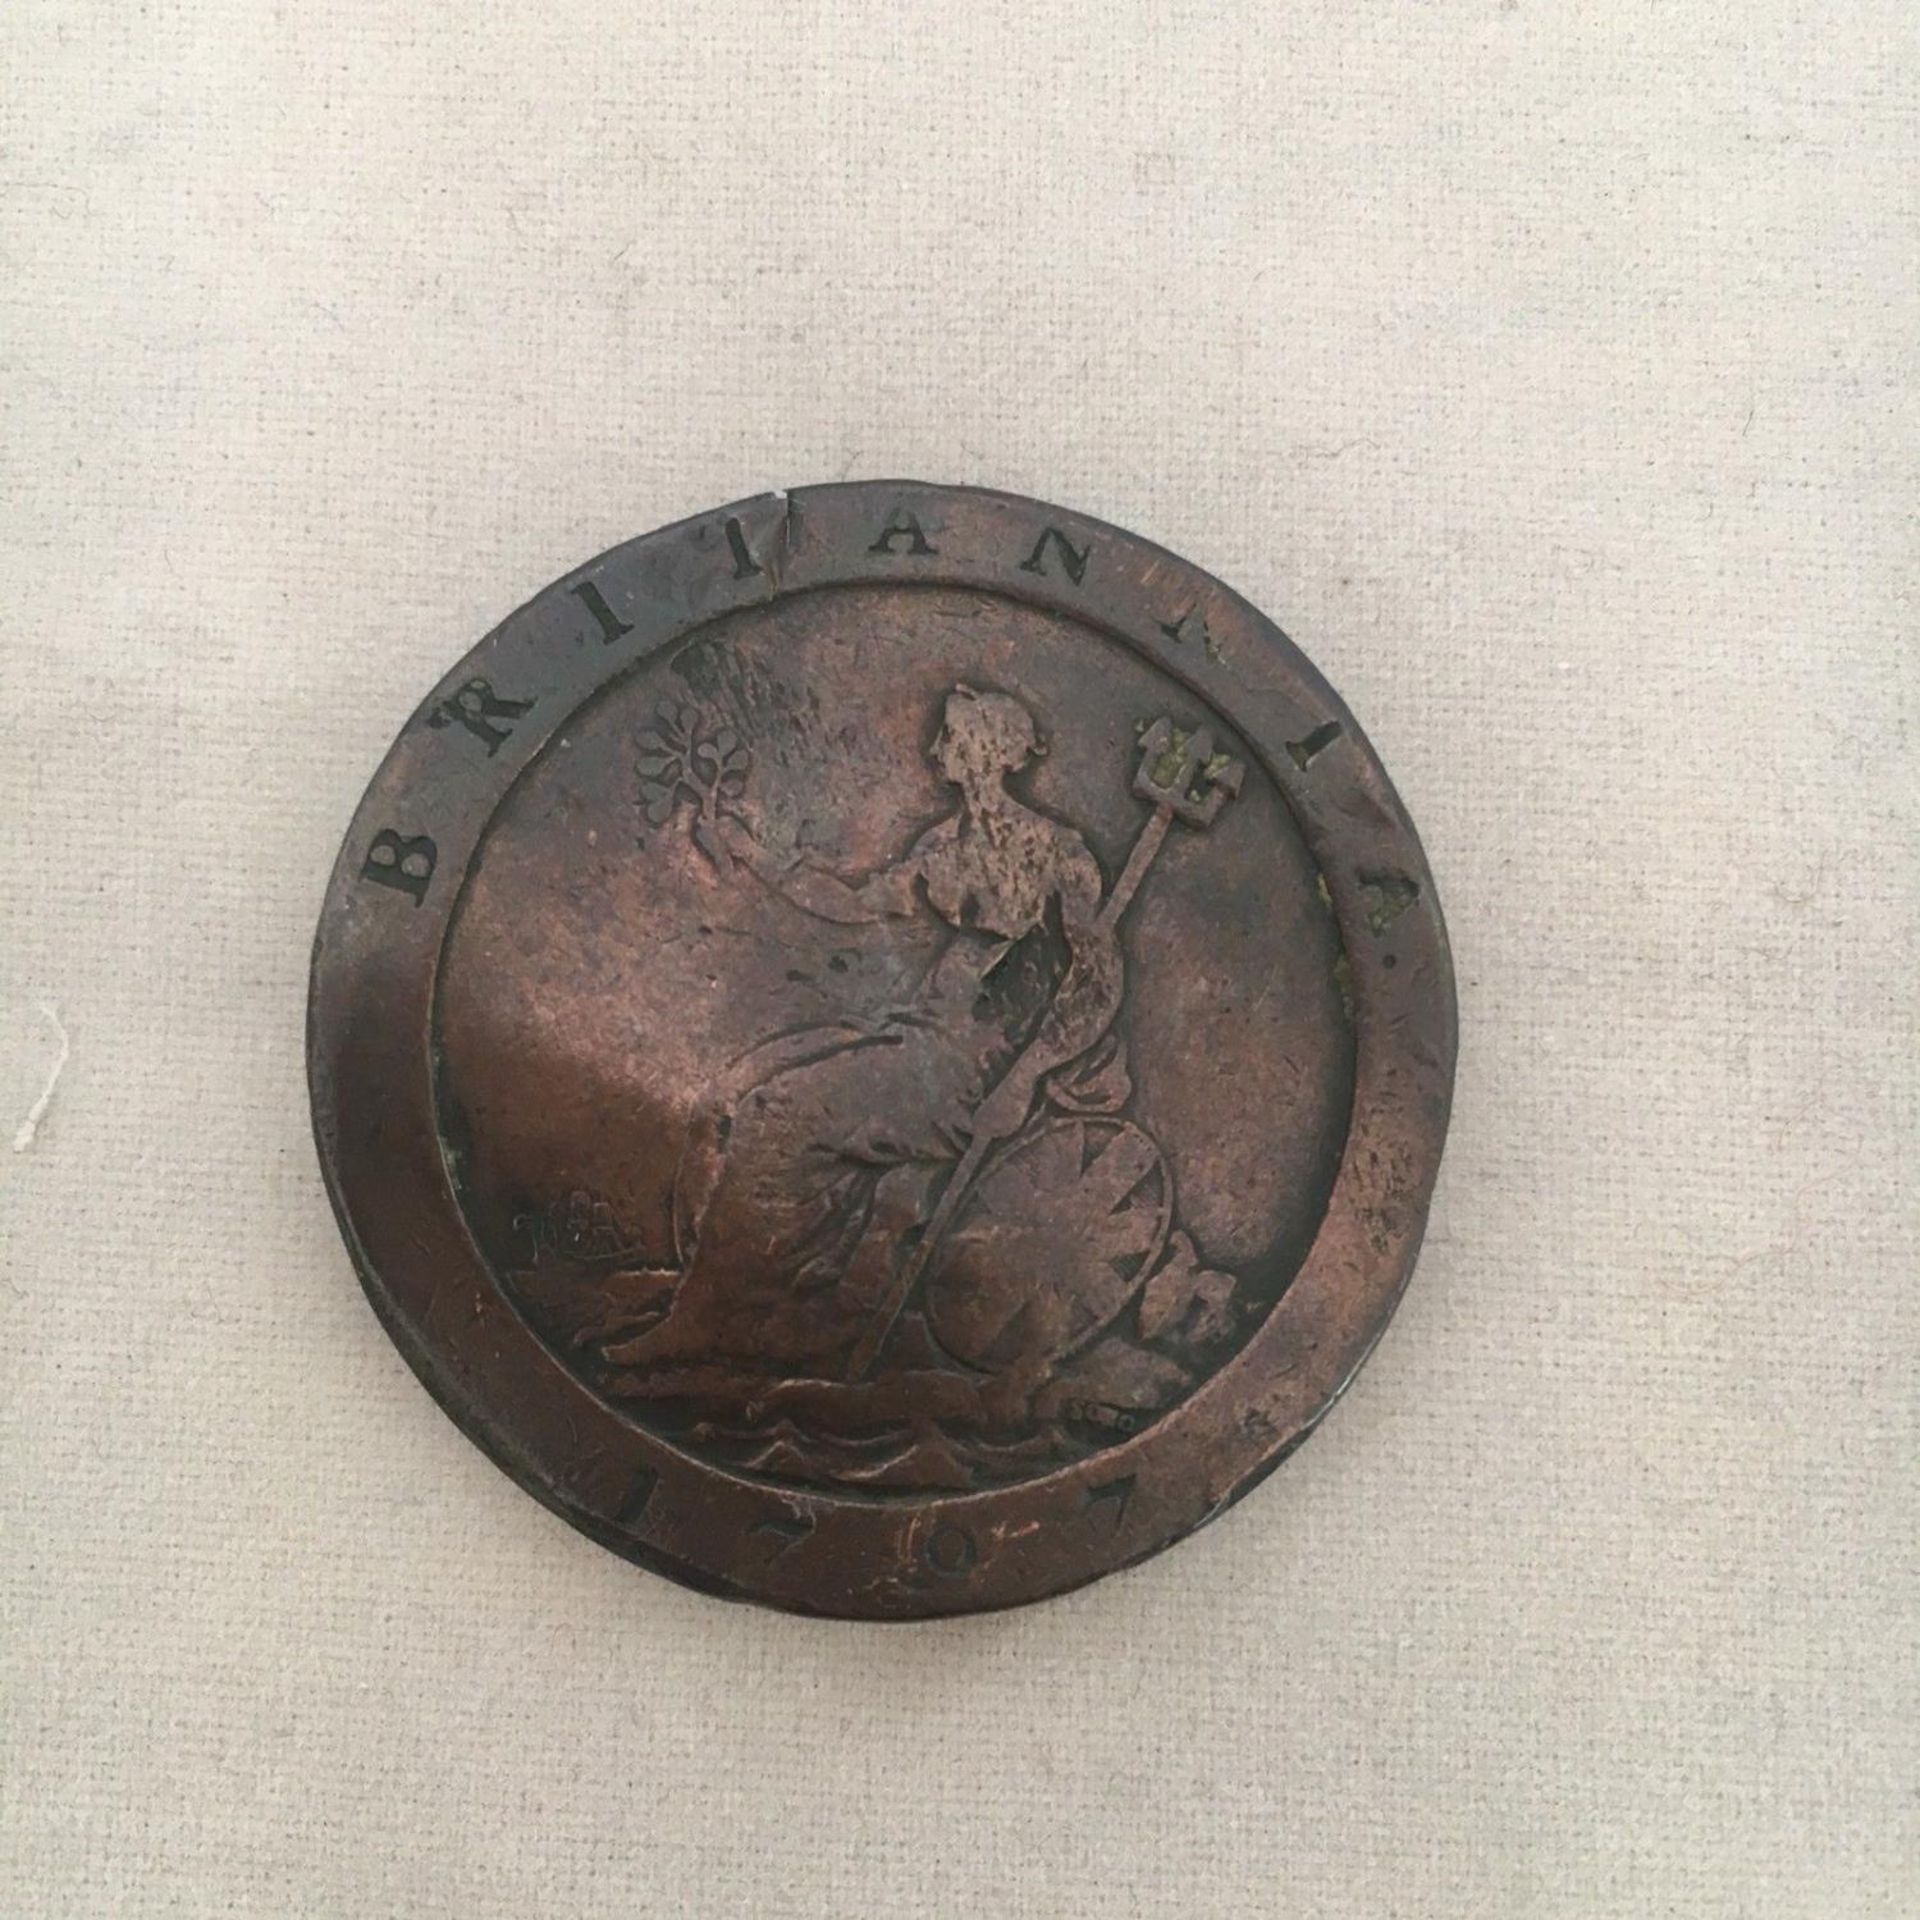 George III 1797 Cartwheel Twopence 2d Coin - Image 2 of 3